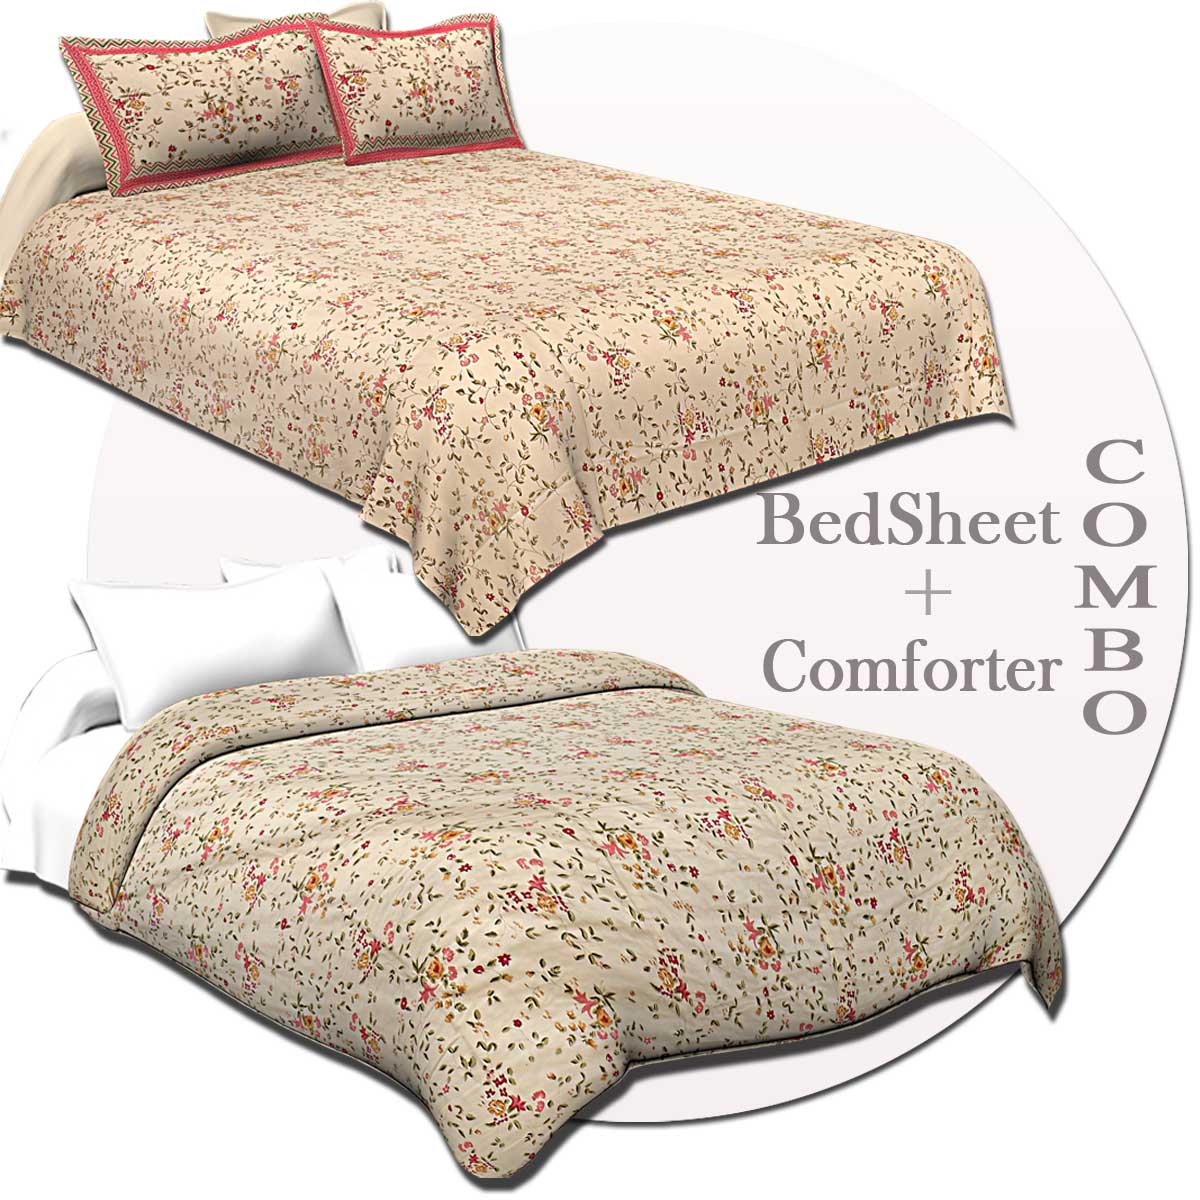 COMBO62 Cream Floral Design 1 Cotton Double Bedsheet + 1 Dohar Combo